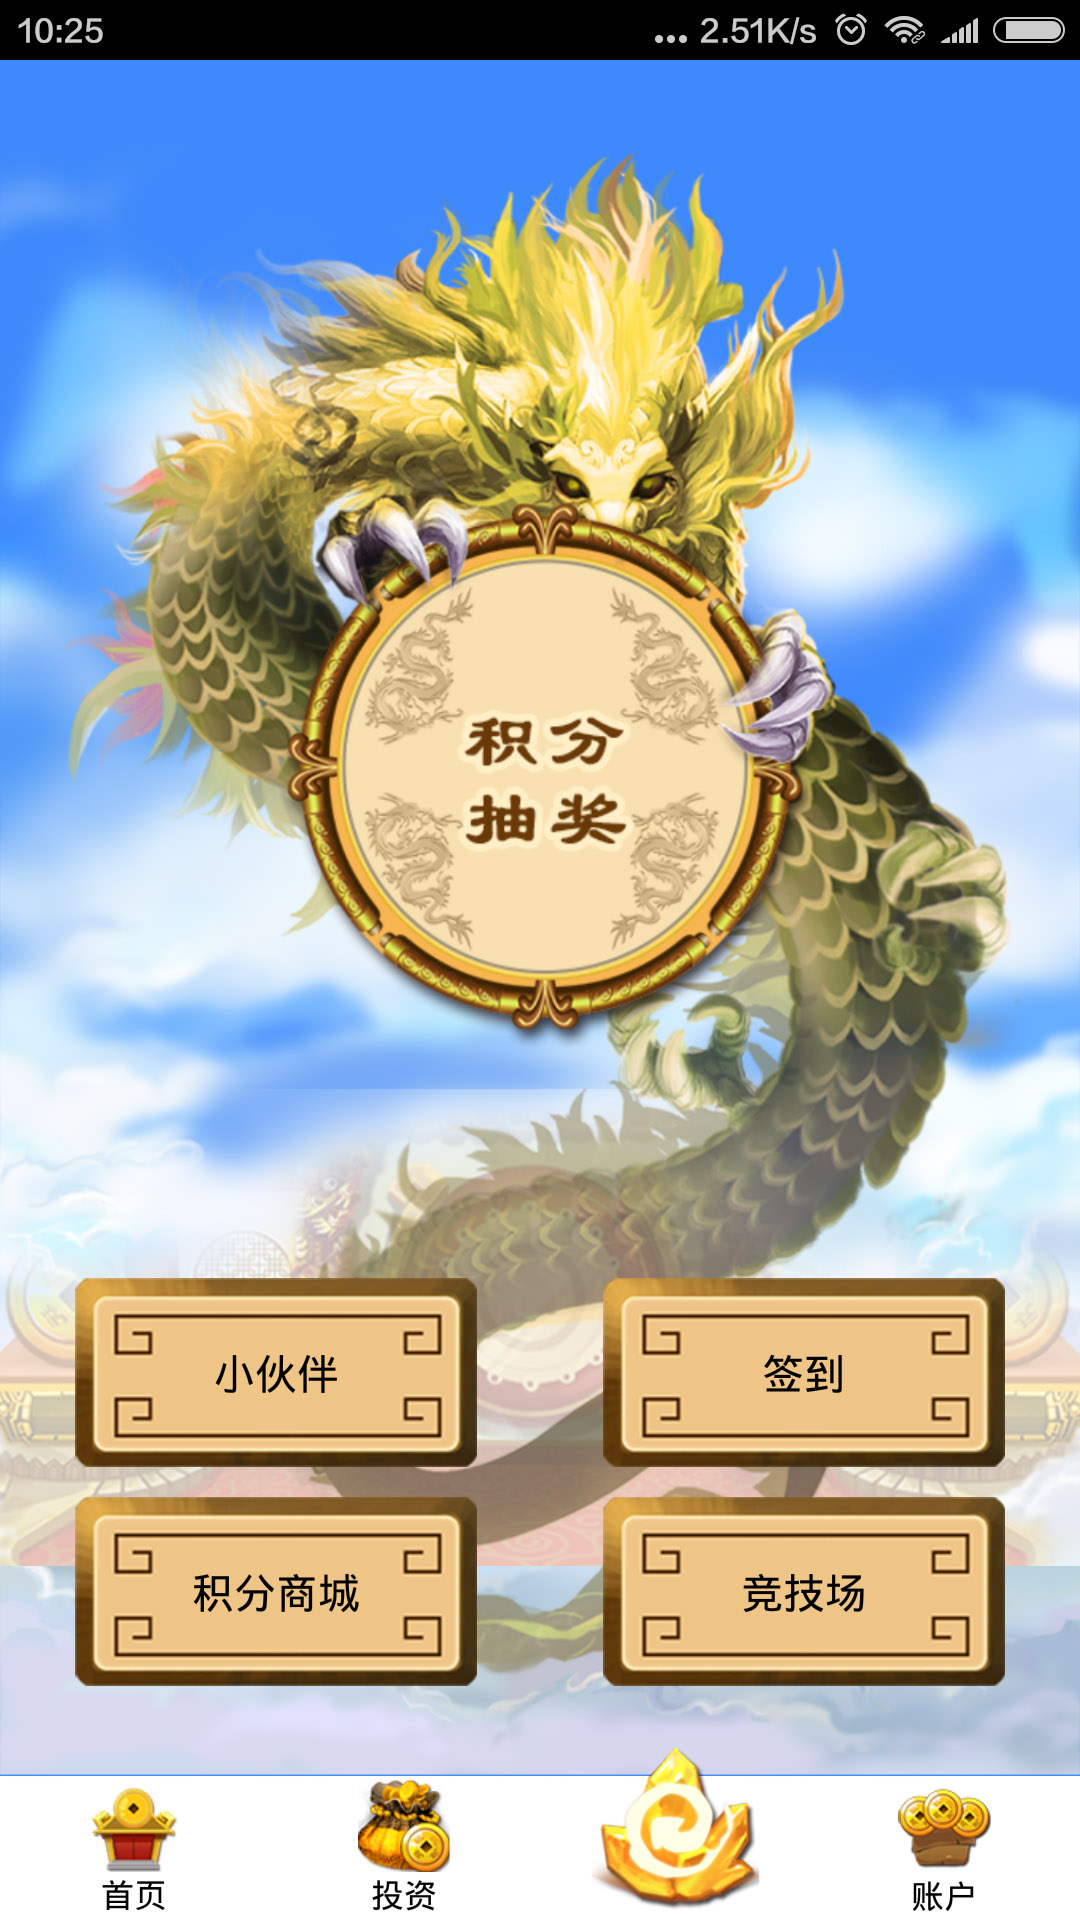 Screenshot 2016 03 03 10 25 33 com.yidianfu.playm